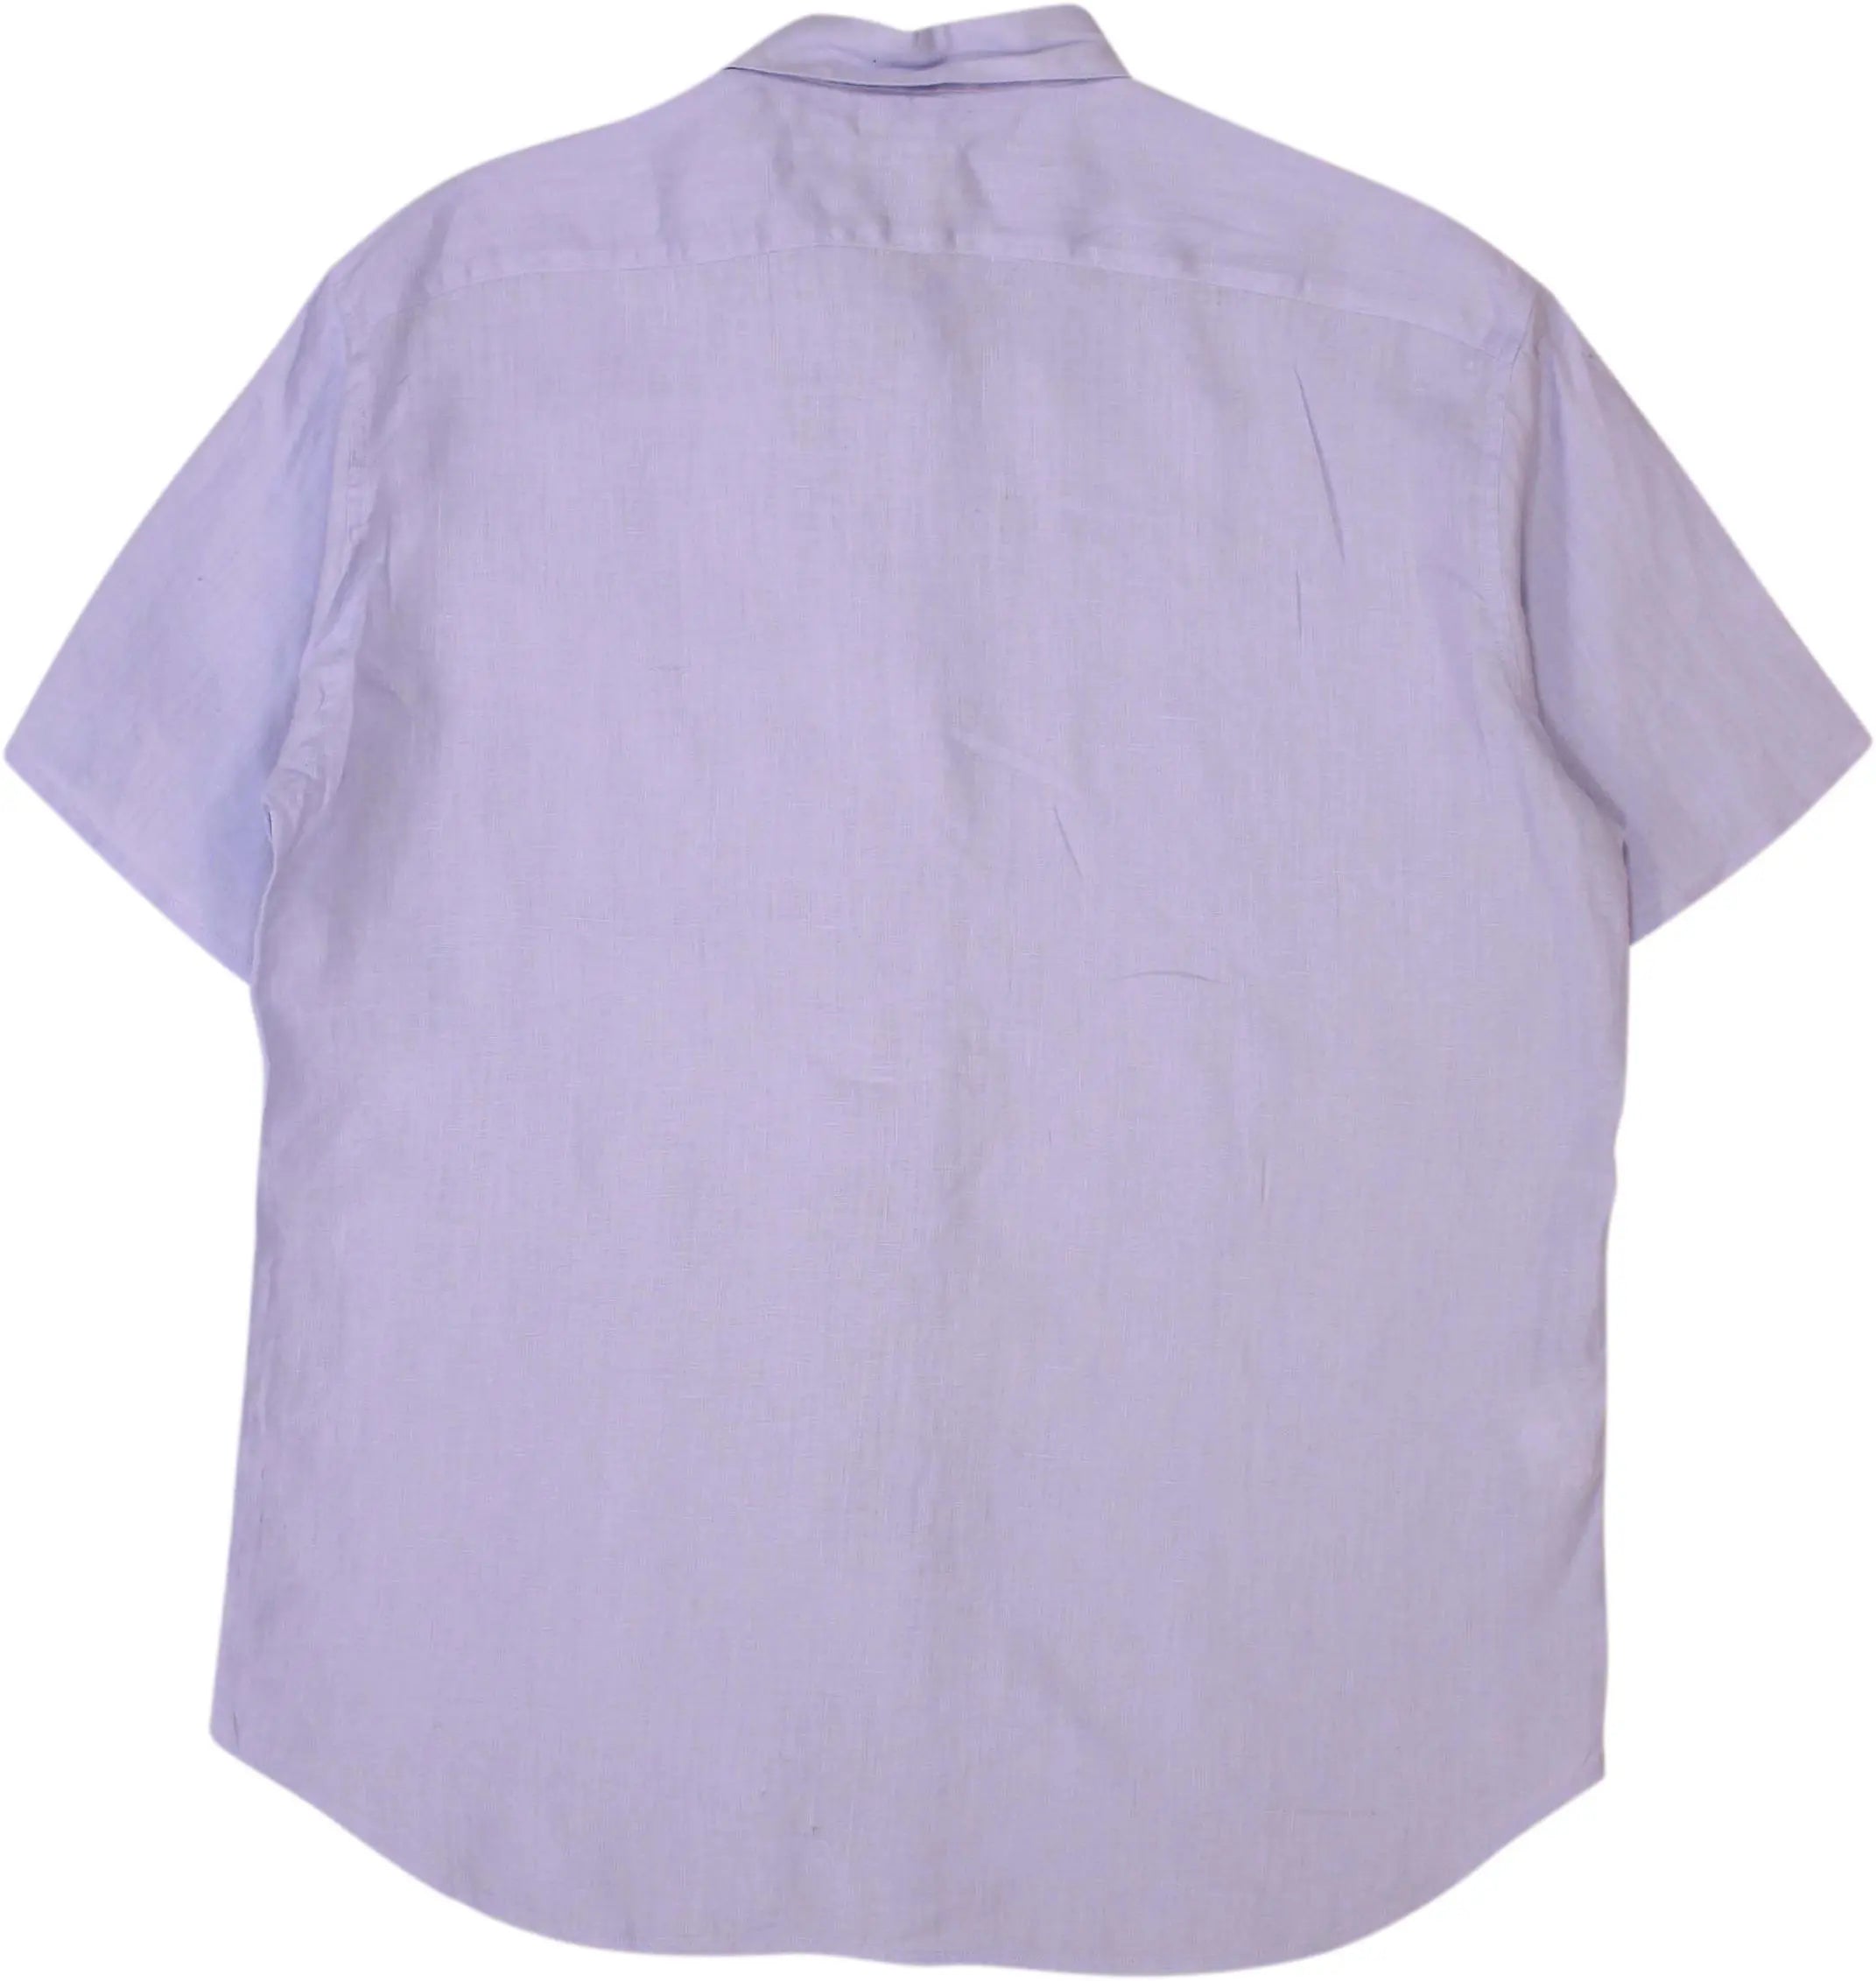 Hugo Boss - Linen Short Sleeve Shirt by Hugo Boss- ThriftTale.com - Vintage and second handclothing